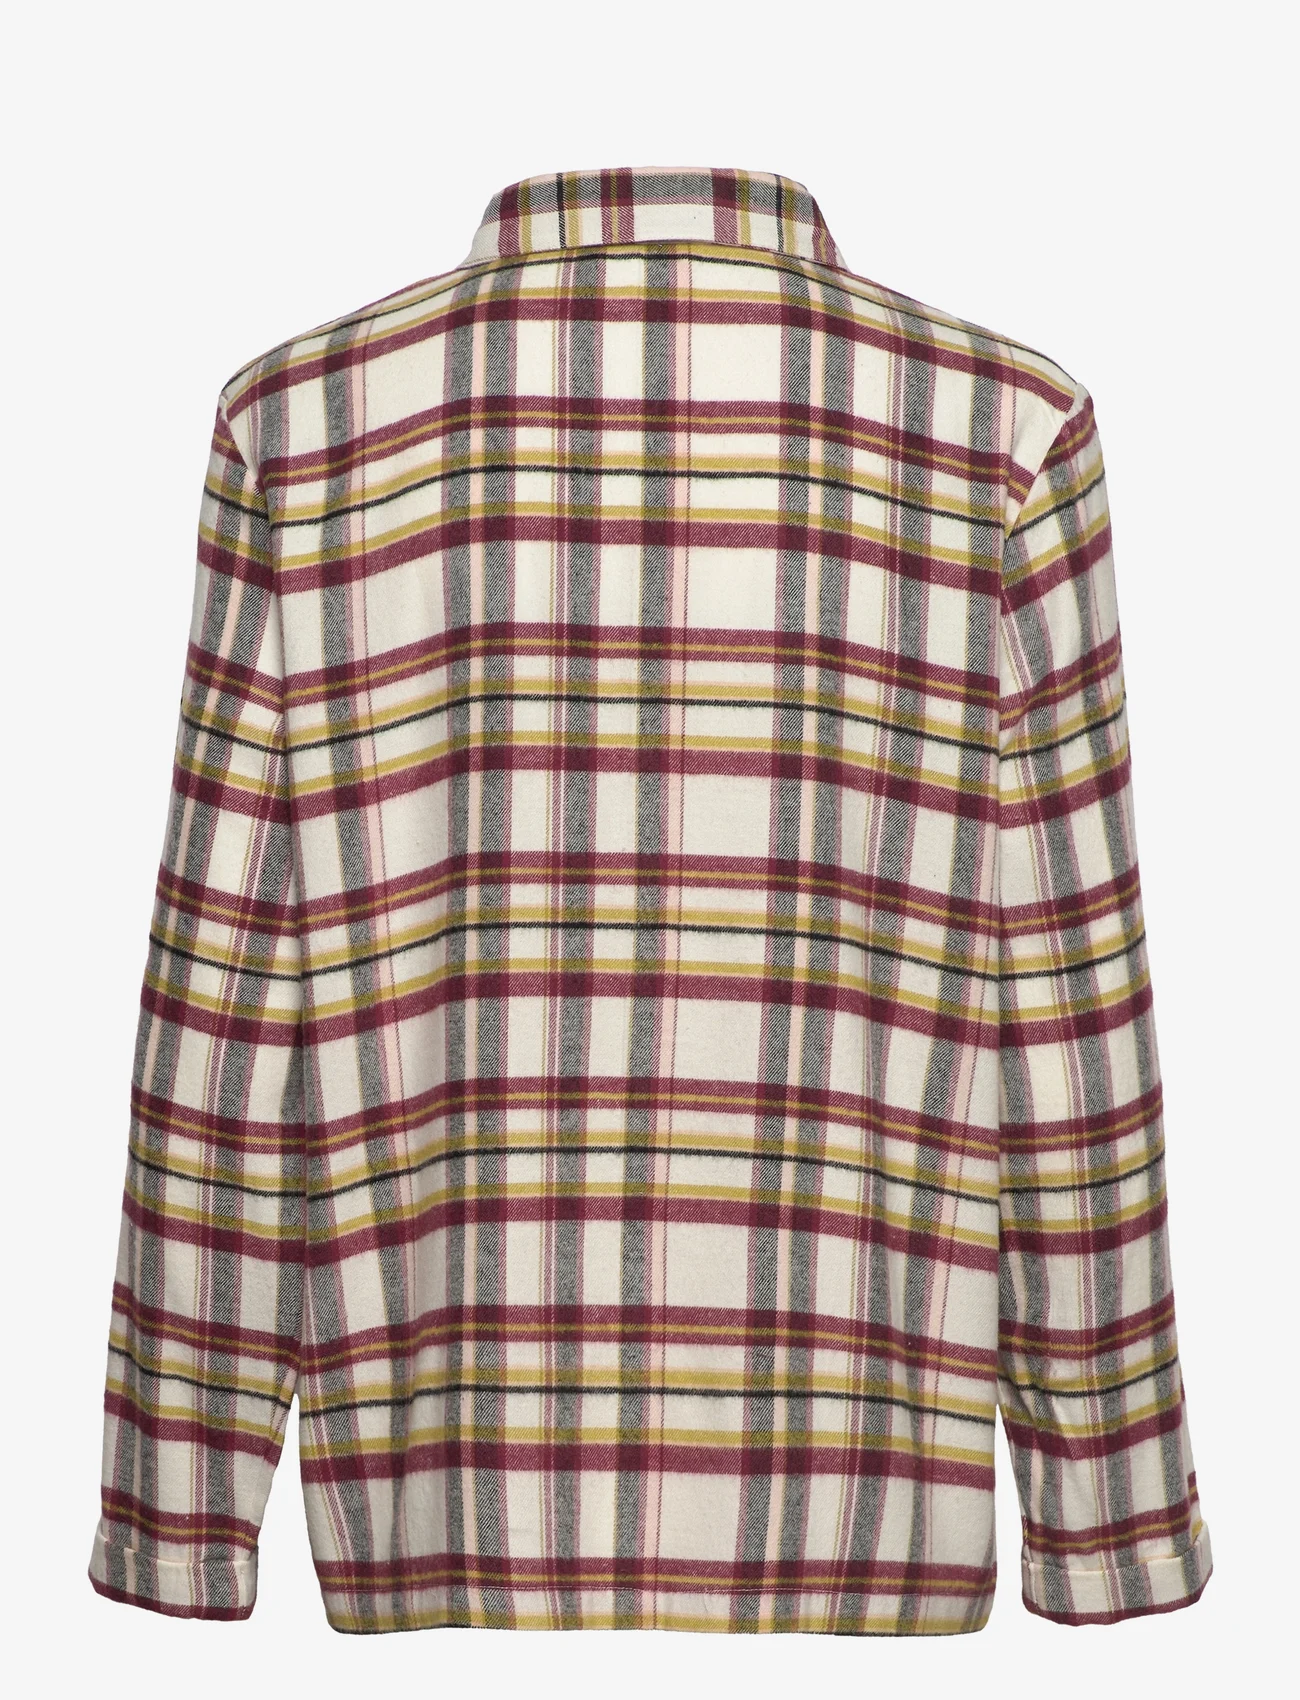 Passionata - Ortense Long Sleeve Shirt - women - print scottish - 1